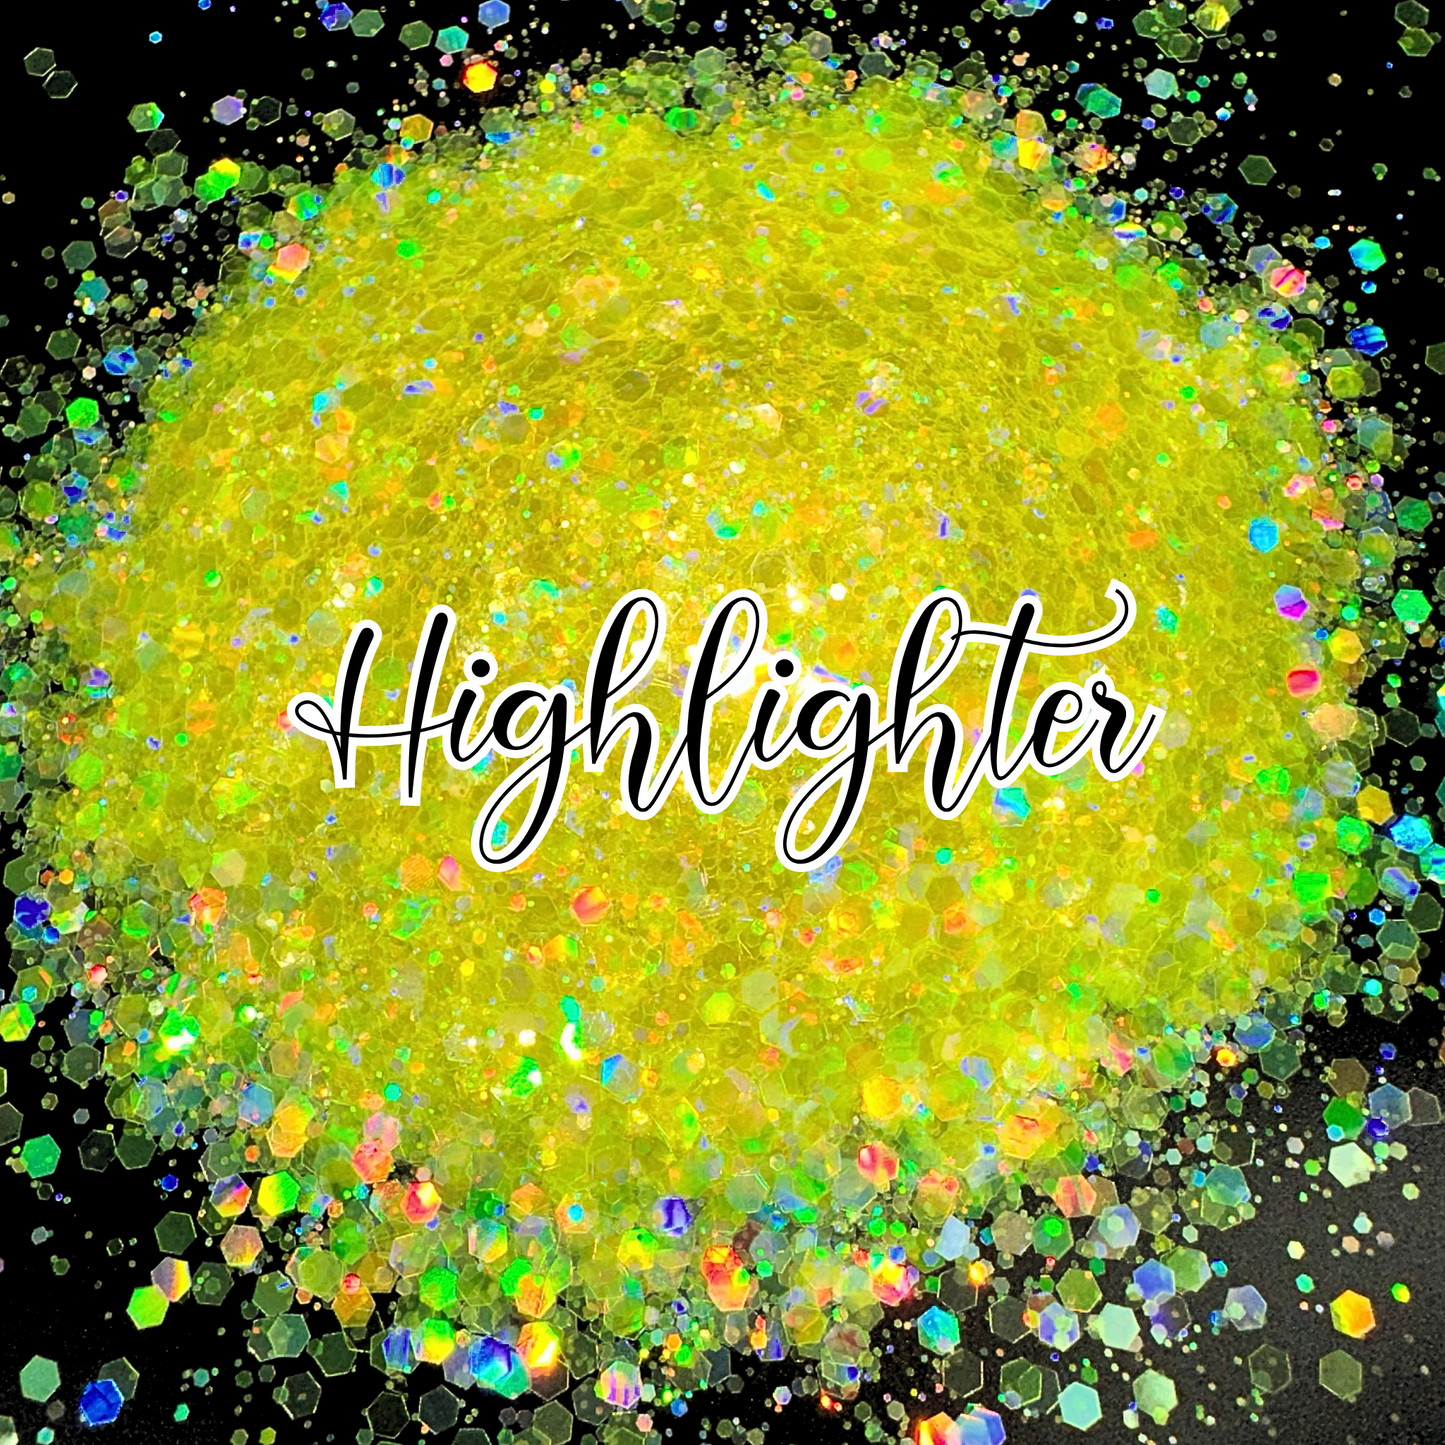 Highlighter Chunky Neon Glitter Mix